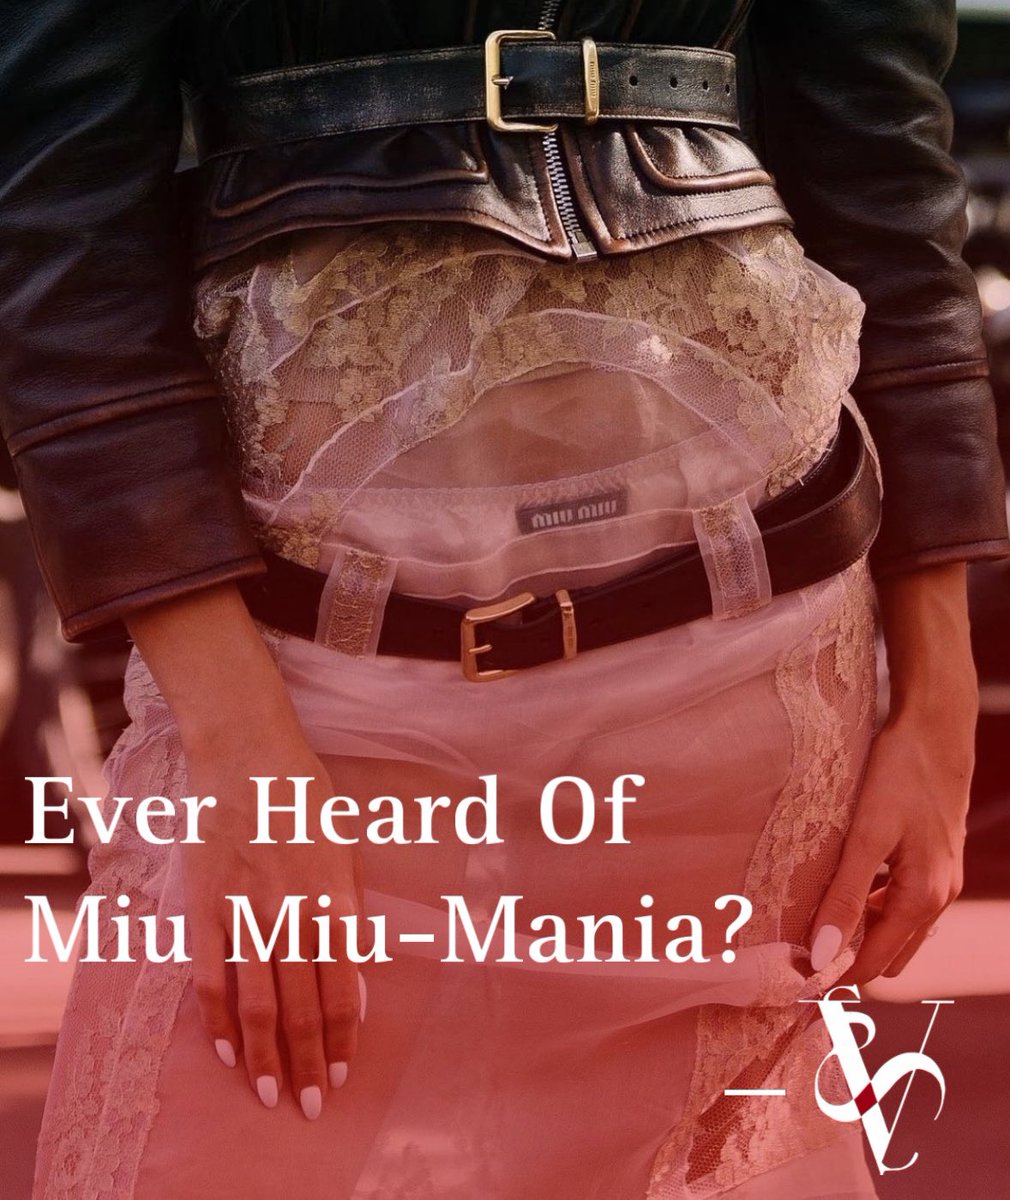 While you may have heard of logo-mania, may we introduce… Miu Miu-mania. vestissemagazine.mystrikingly.com/blog/ever-hear…